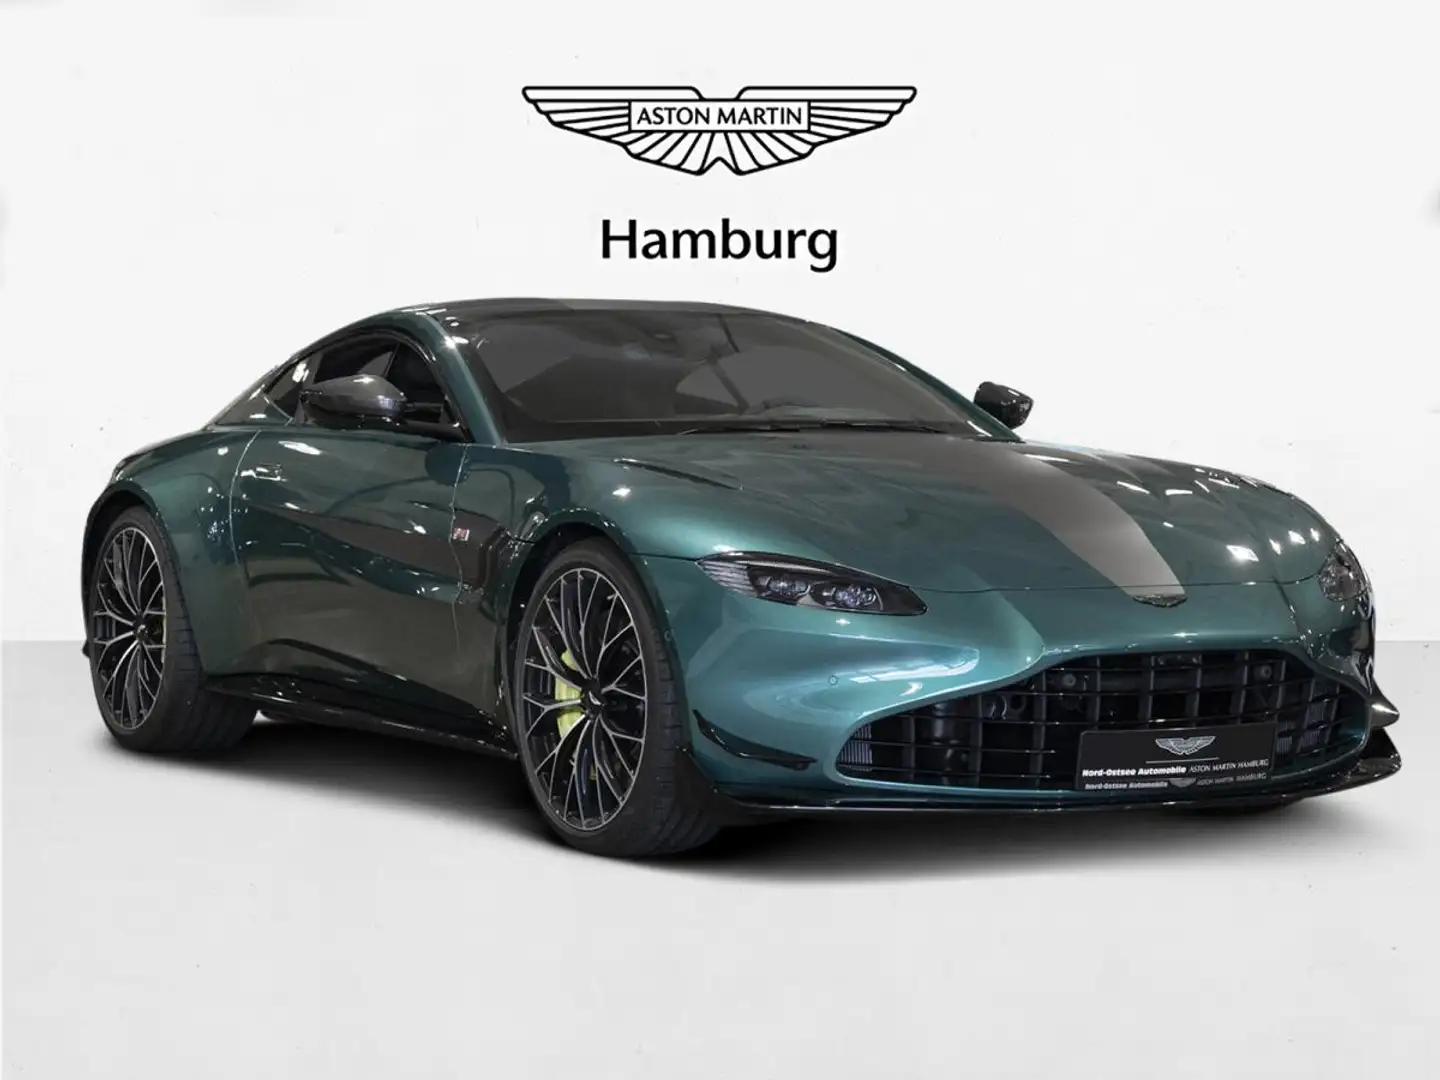 Aston Martin Vantage V8 F1 Coupe - Aston Martin Hamburg Grün - 1